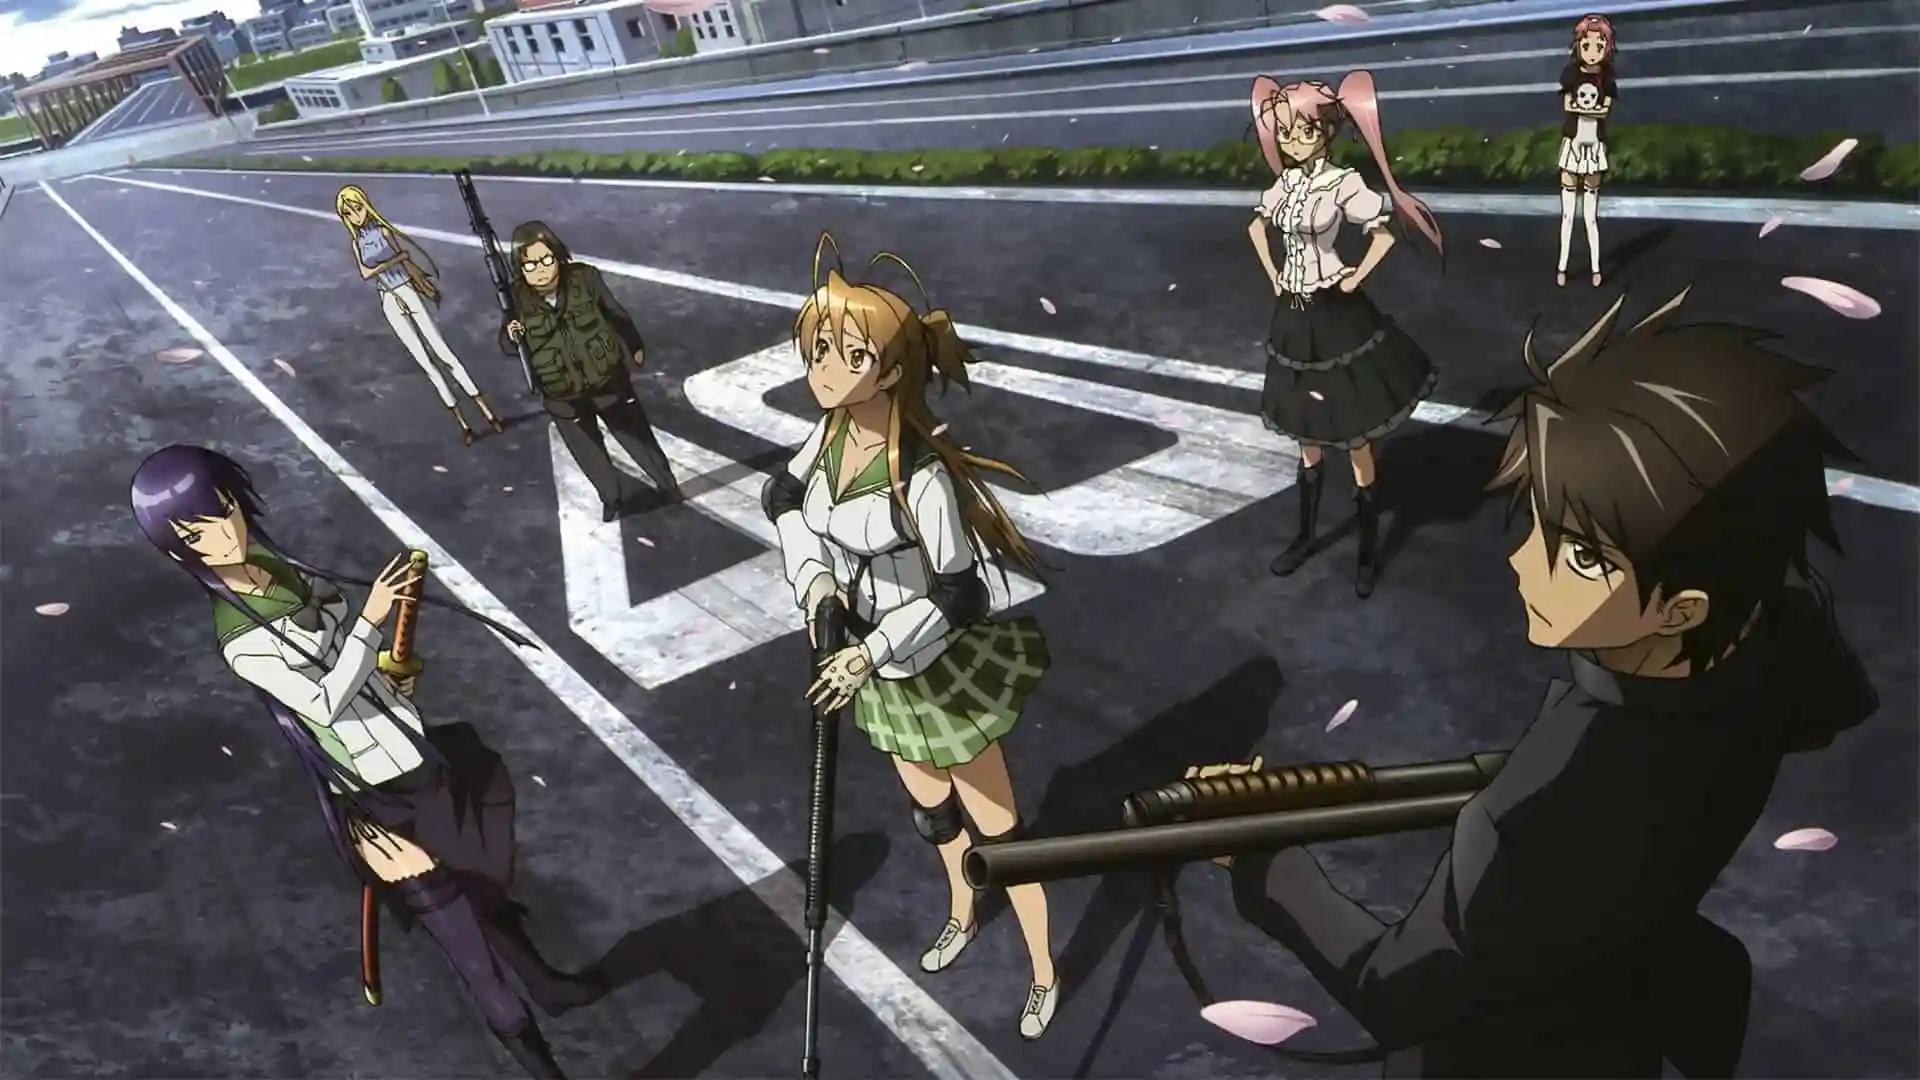 Animes Parecidos a Highschool of the Dead [Anime Como HoD]